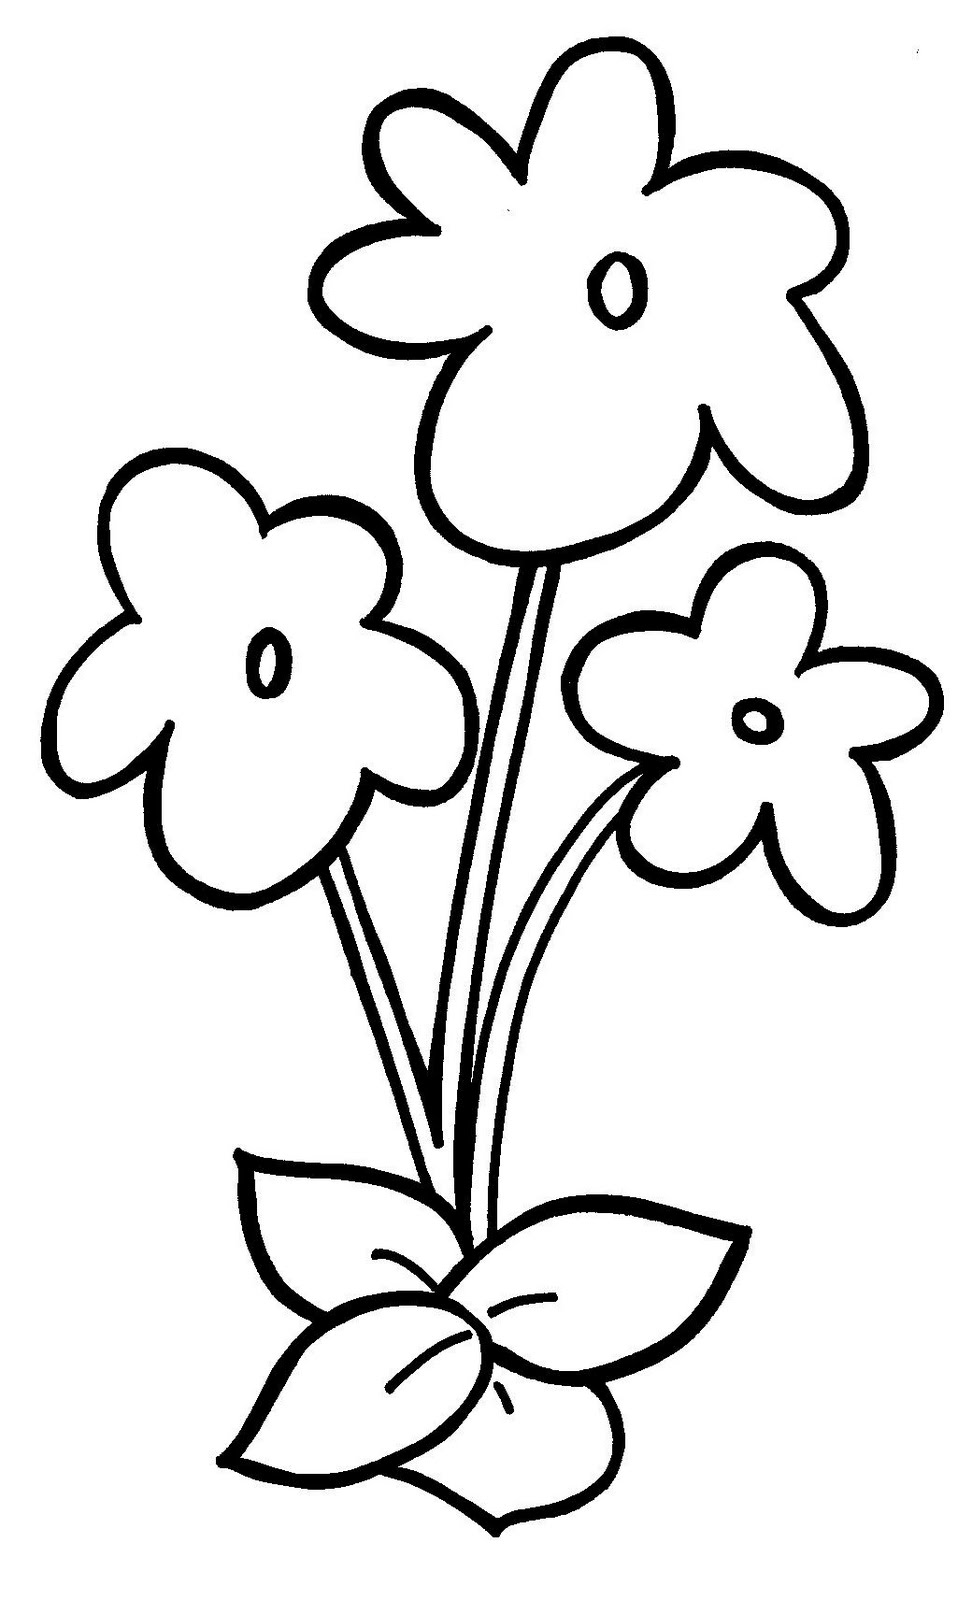 Free Preschool Flower Cliparts, Download Free Preschool Flower Cliparts